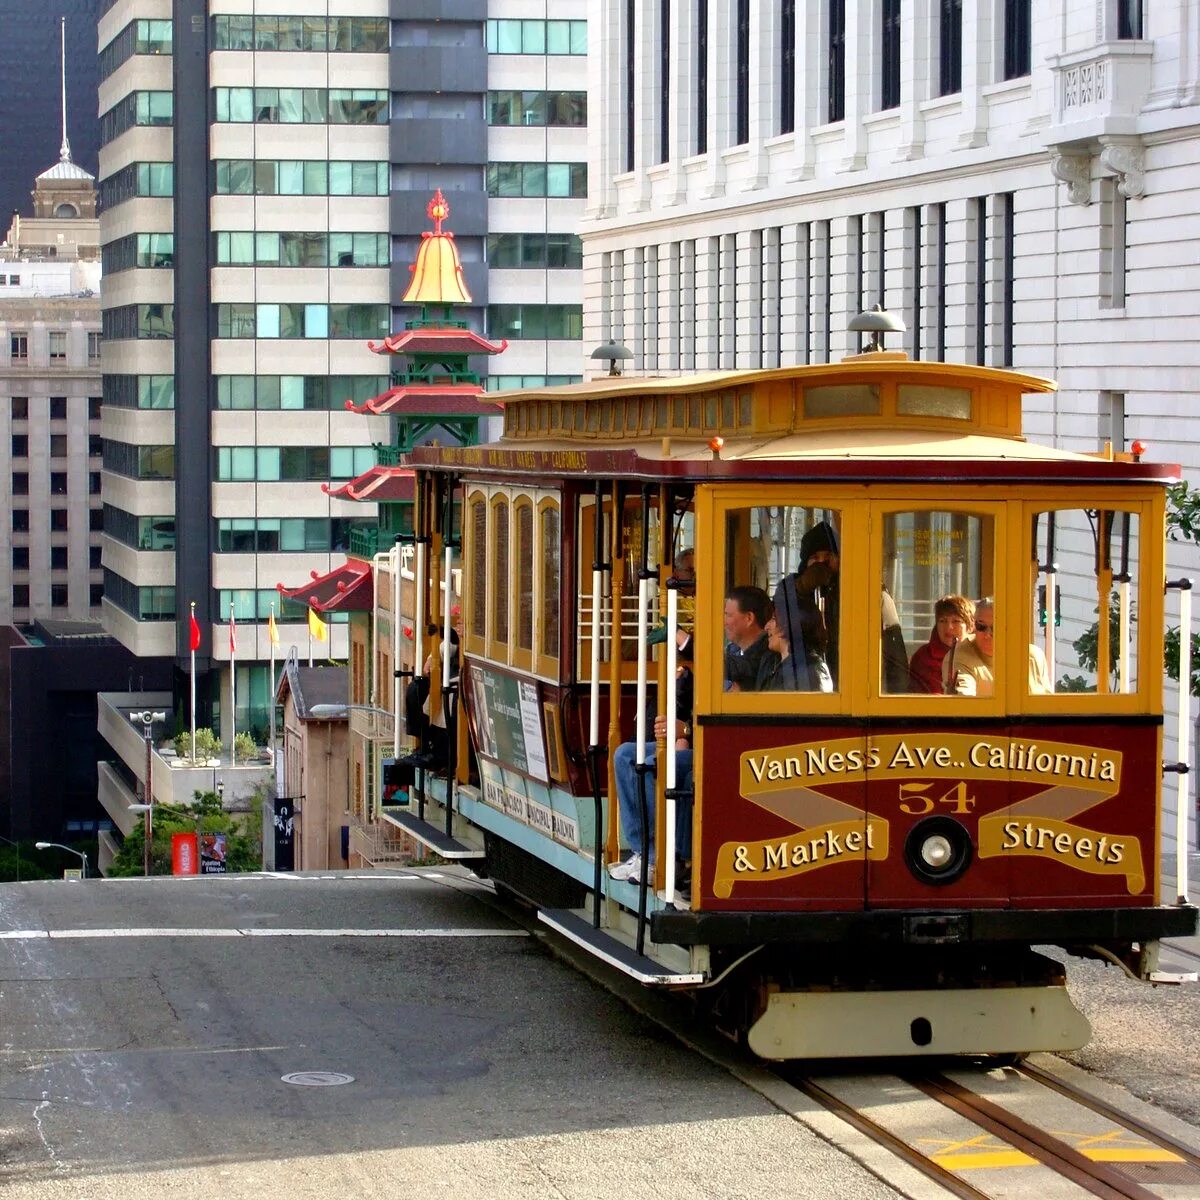 Канатный трамвай. Канатный трамвай Сан-Франциско Сан-Франциско. Сан Франциско трамвайчик. Сан Франциско Cable car. Канатная дорога Сан Франциско.